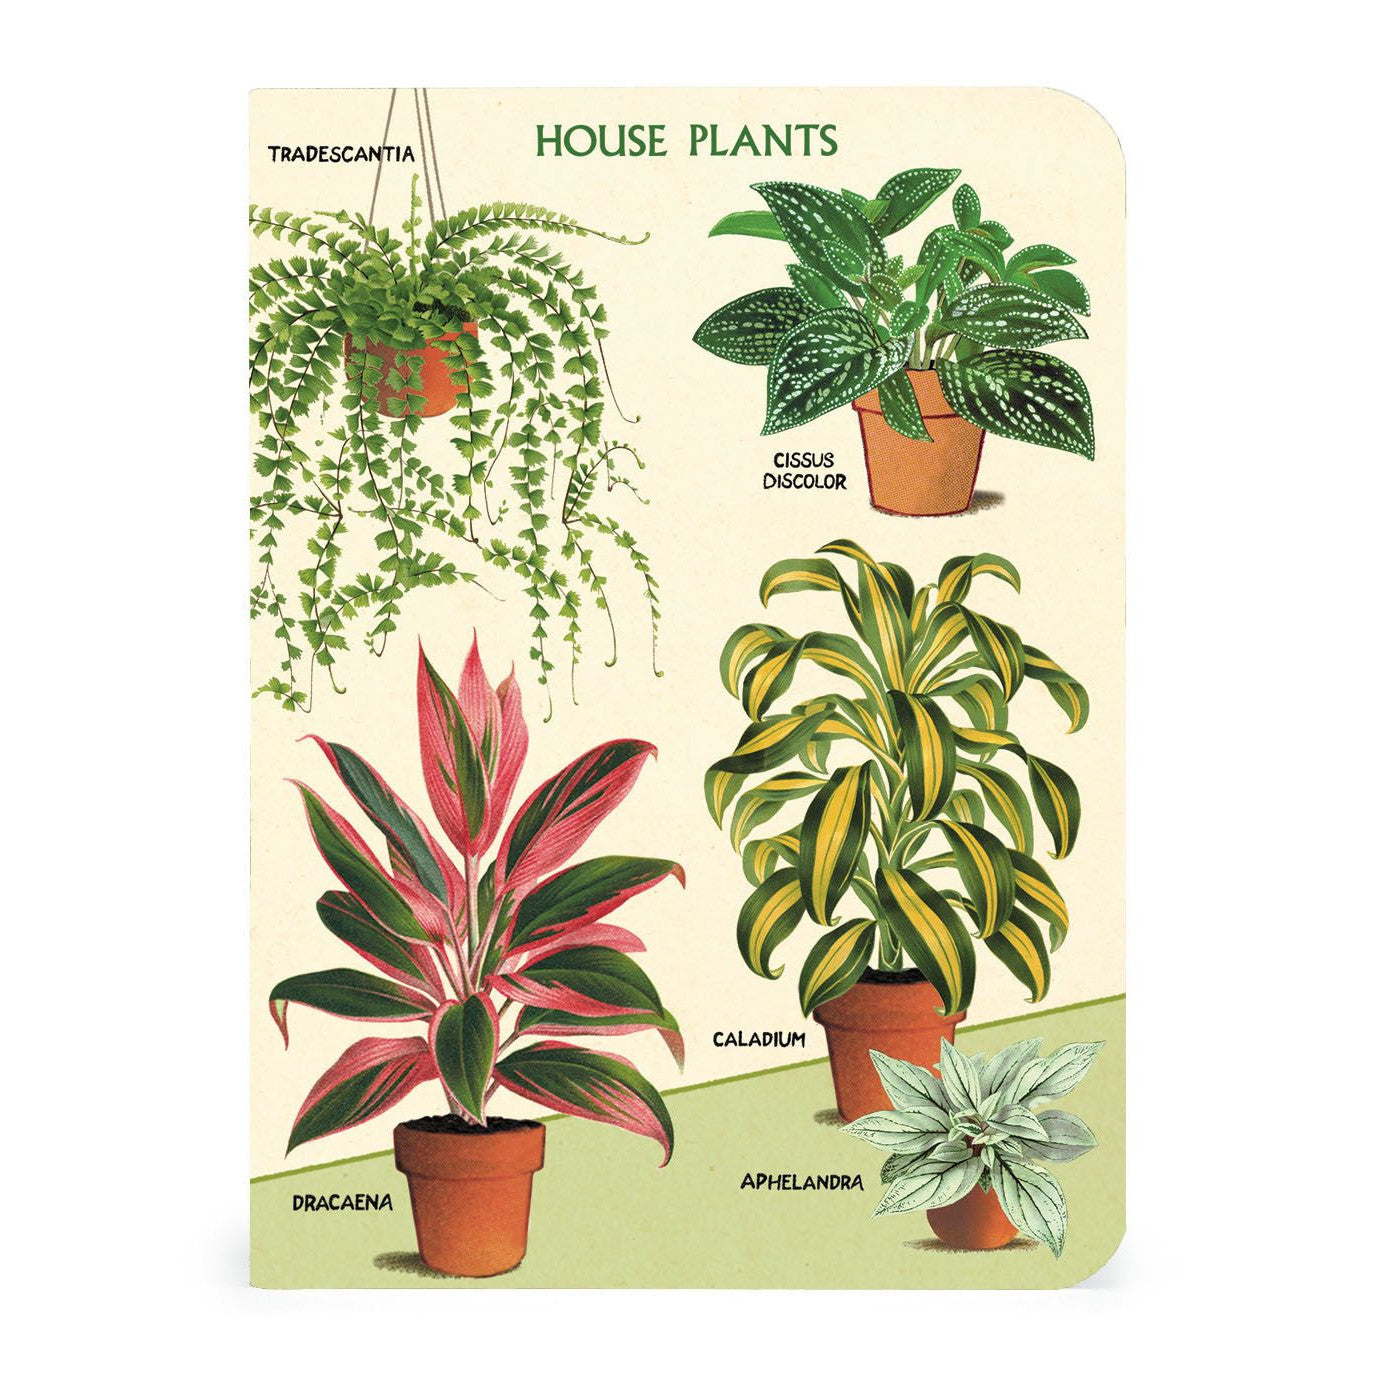 Cavallini & Co. 3 Mini Notebooks - House Plants